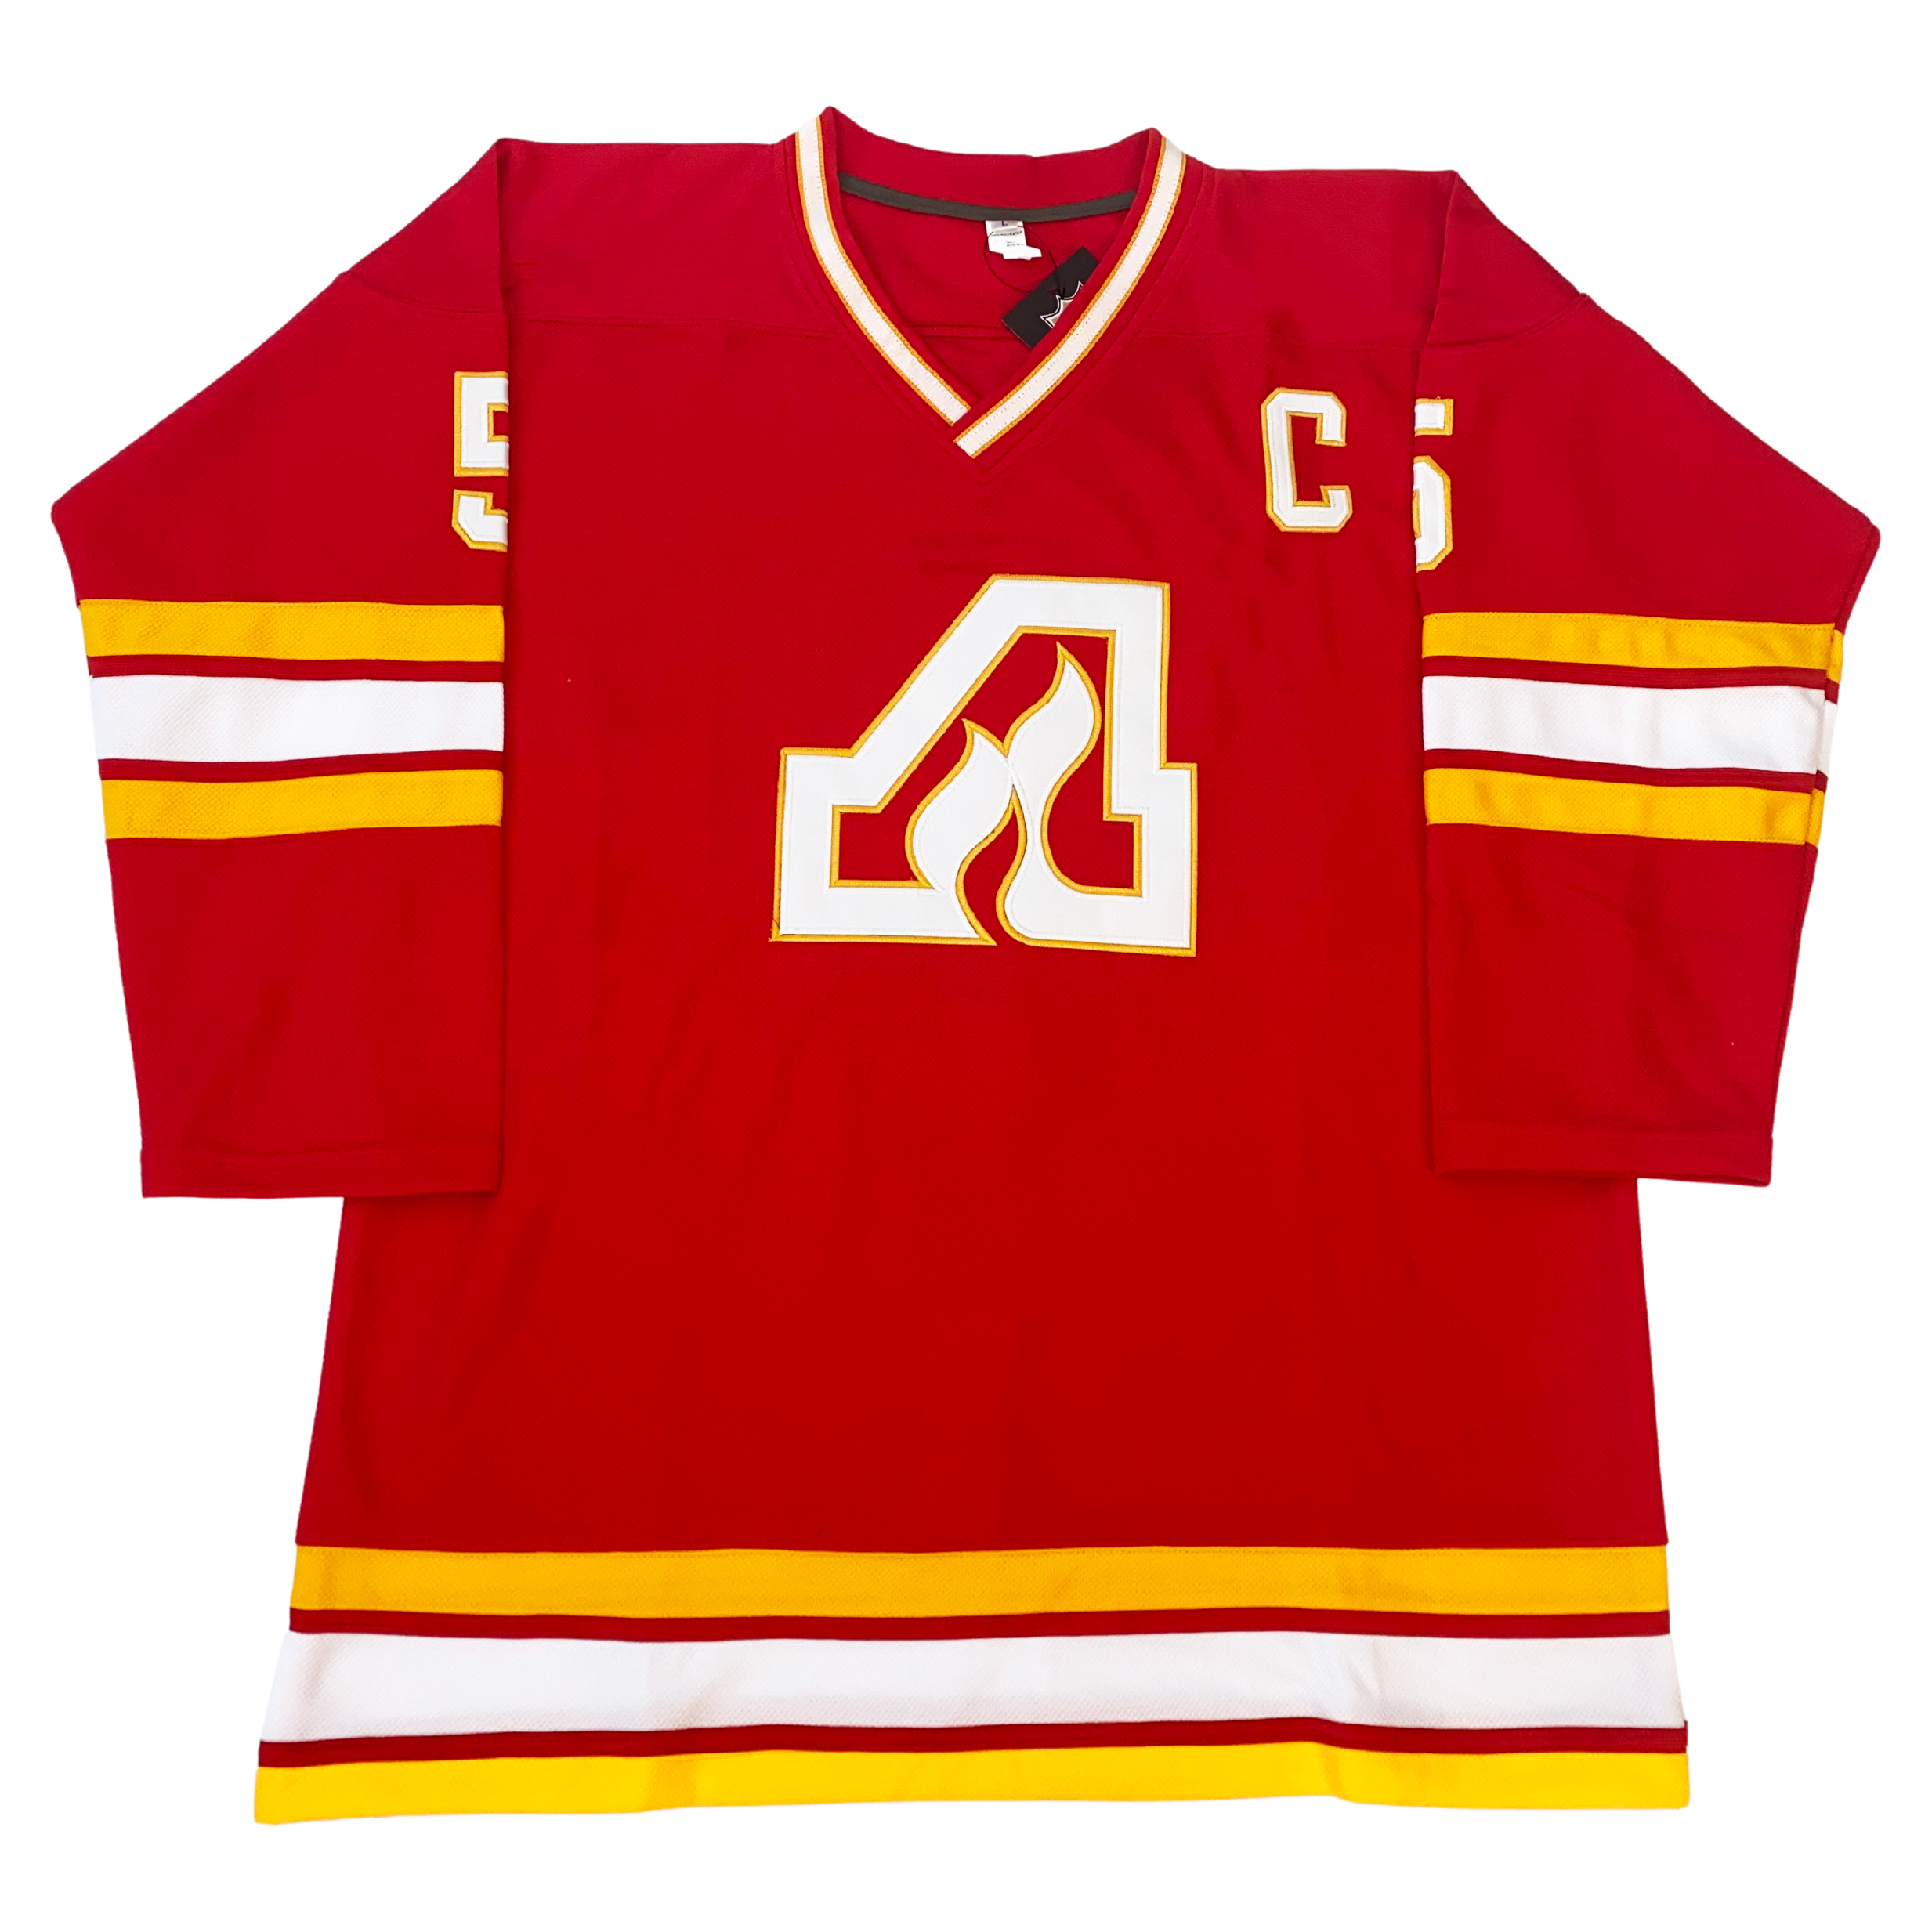 Another look at the Atlanta Flames warmup jerseys Calgary wore